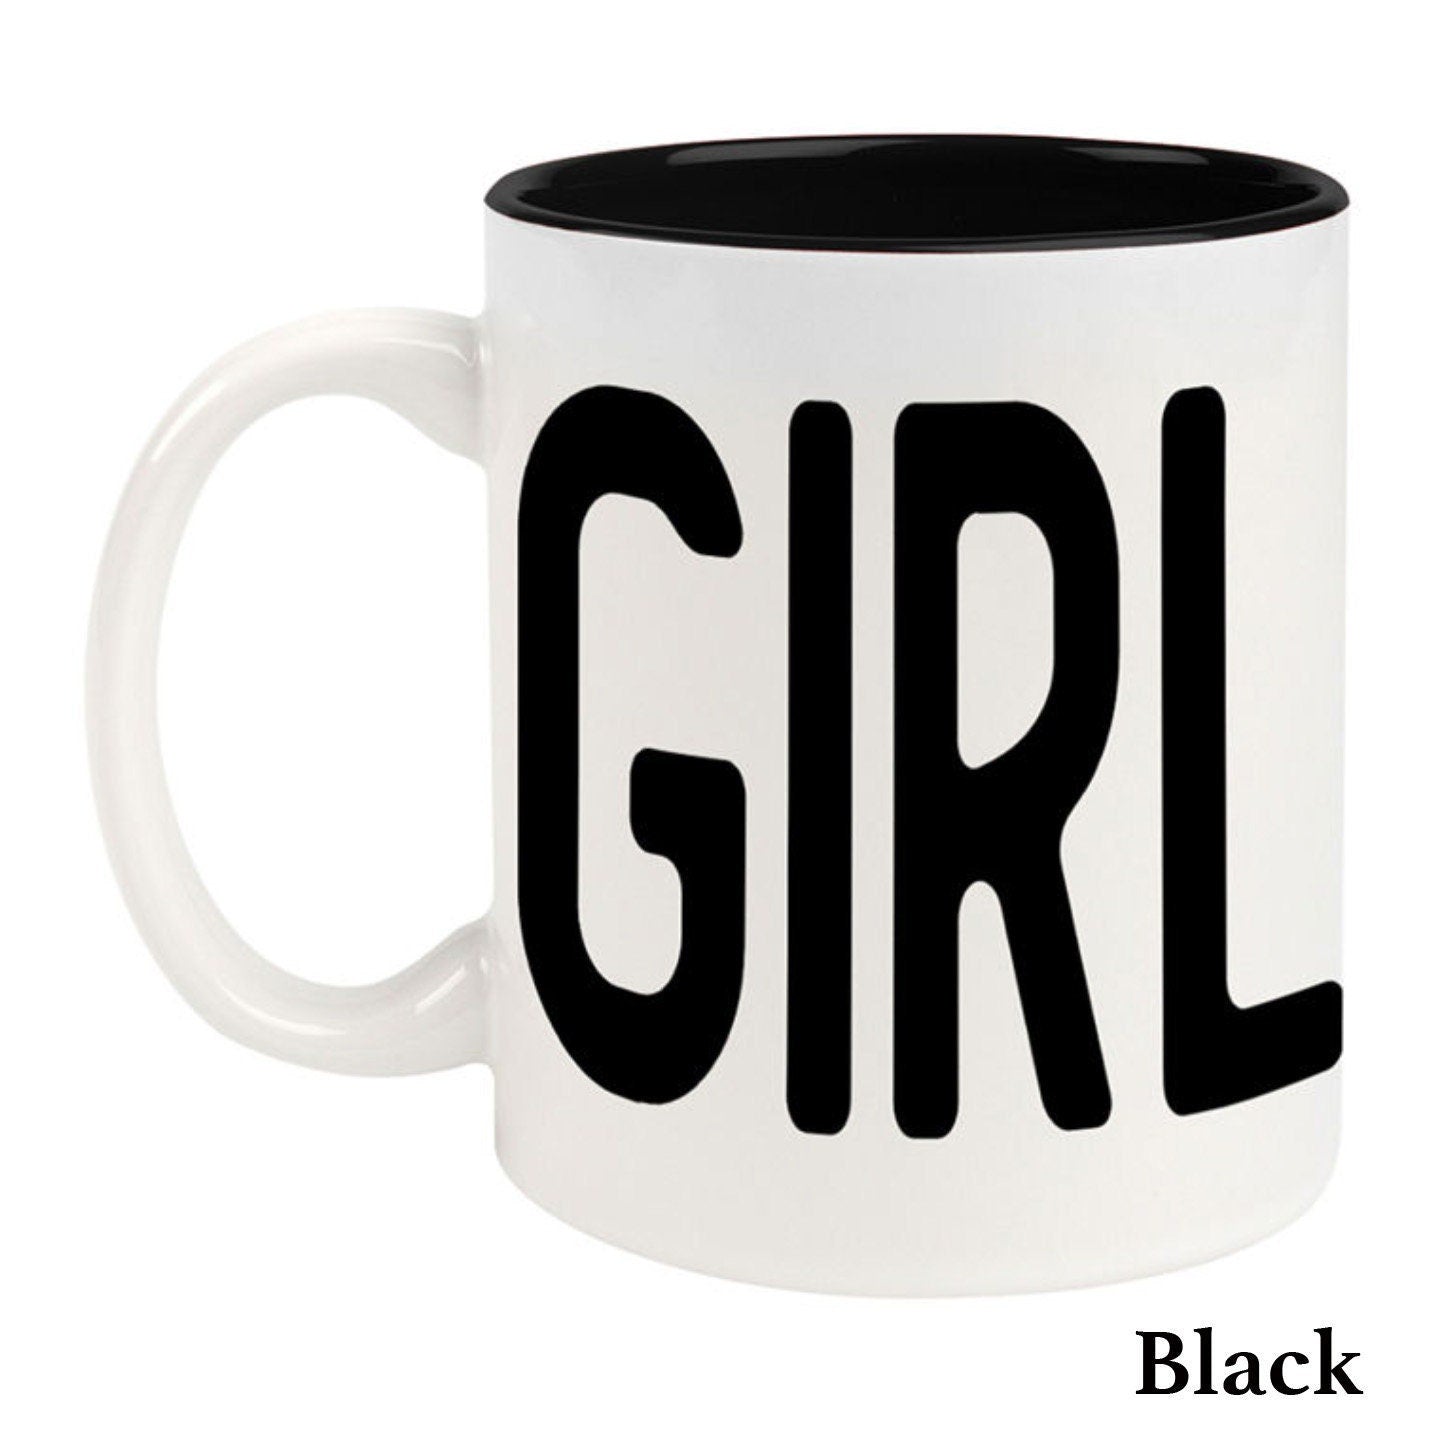 Girldad® Coffee Mug